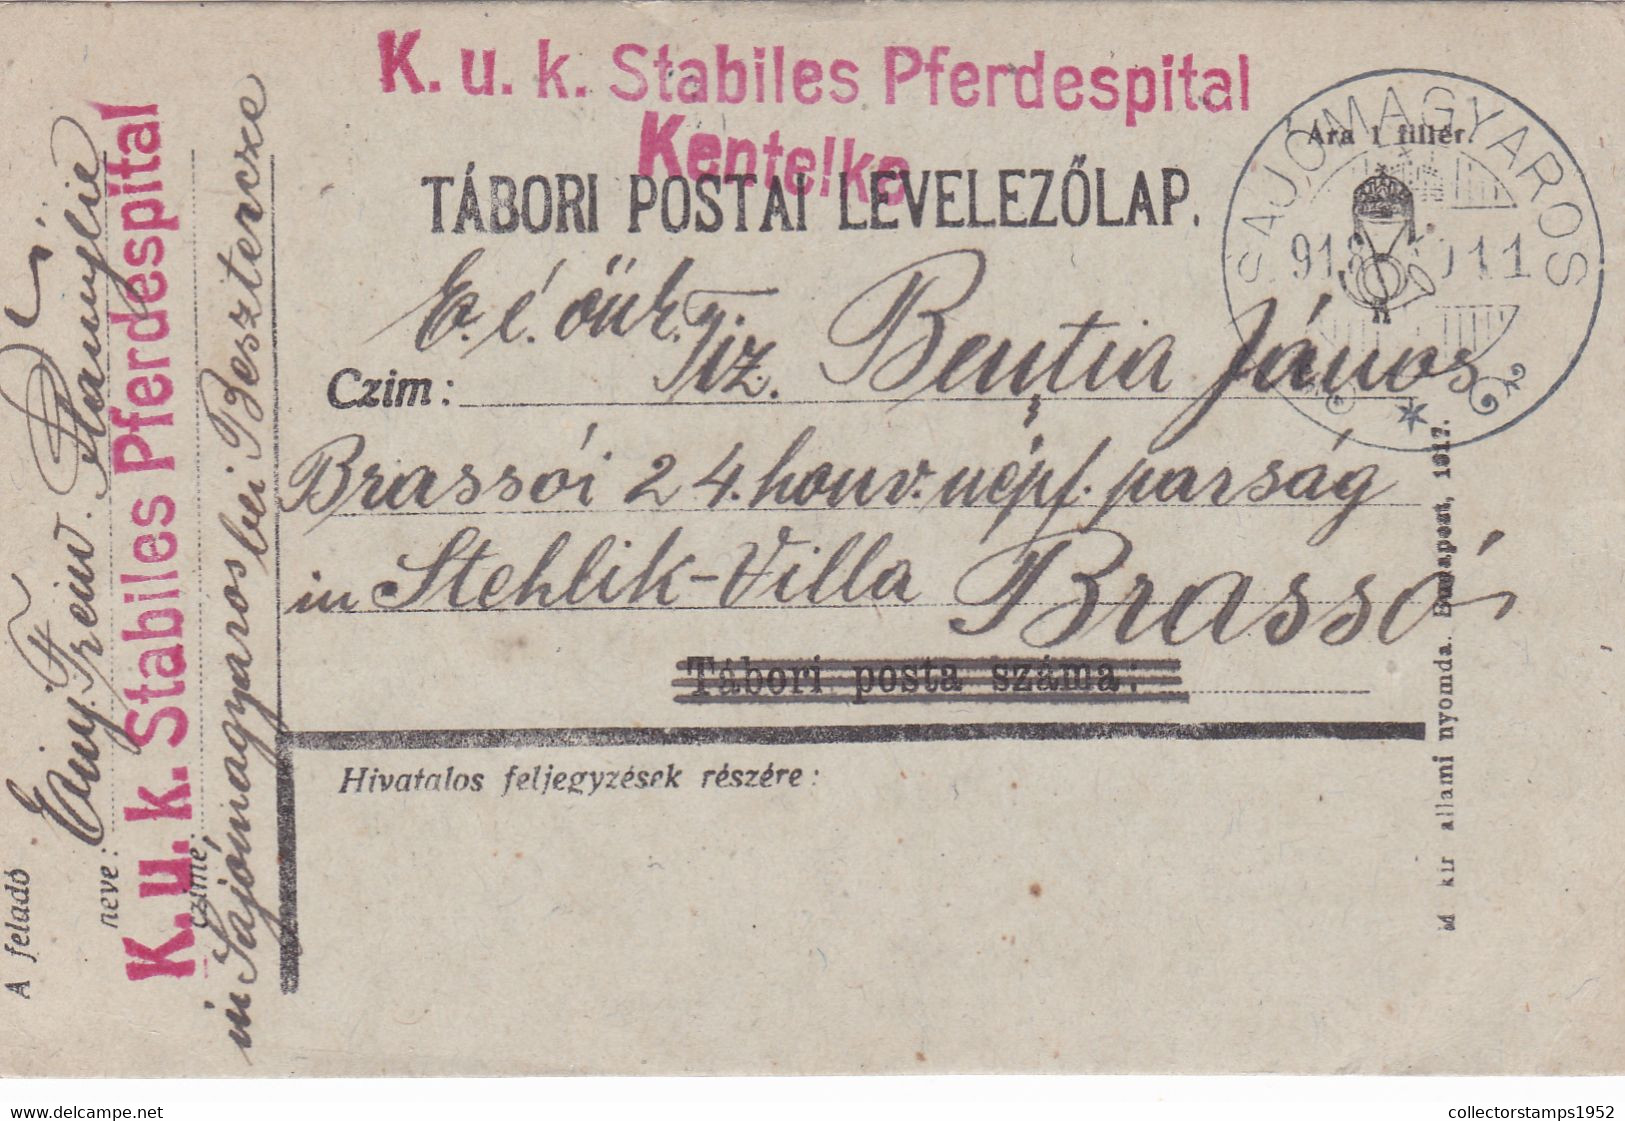 AUSTRO-HUNGARY PC CENSORED PFERDESPITAL,WW1 1918, ROMANIA - World War 1 Letters